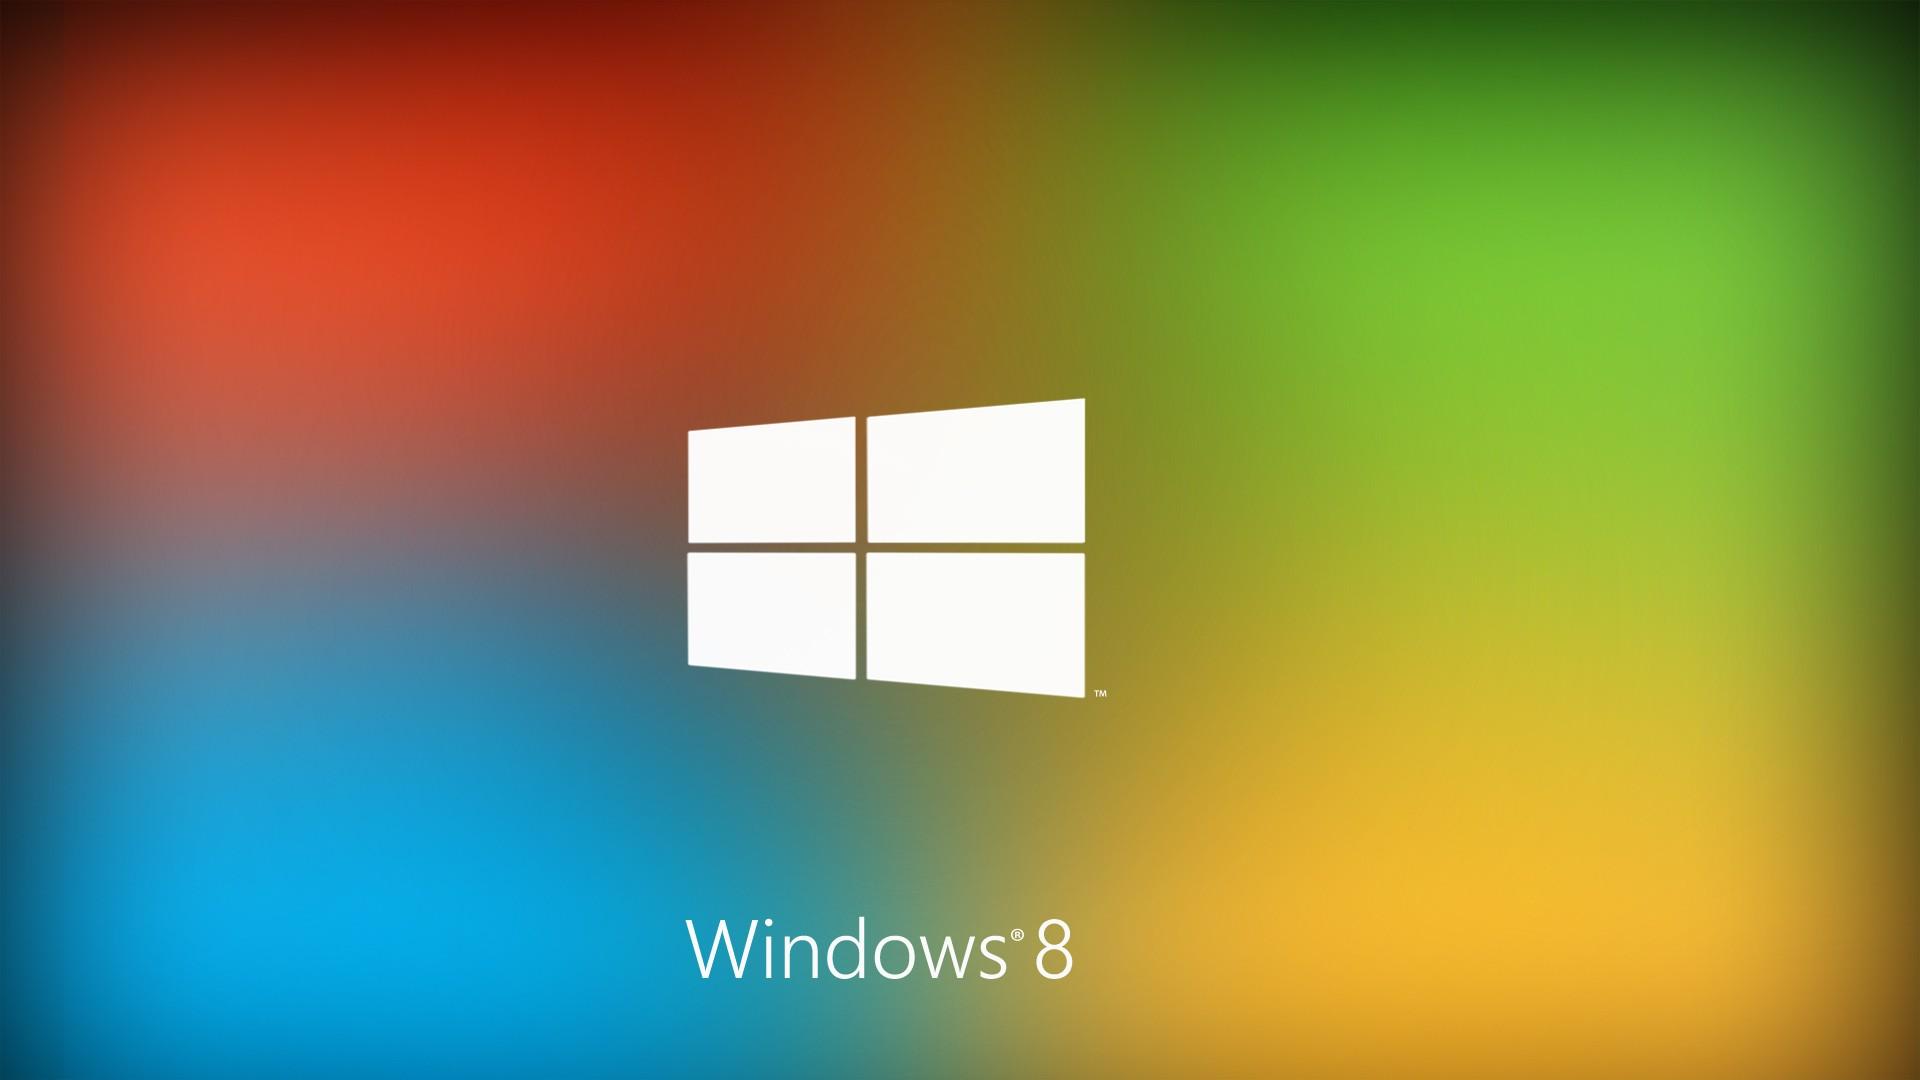 Windows 8 Official Logo - Best Windows 8 Logo 2013 HD Wallpaper Best Windows 8 Logo 2013